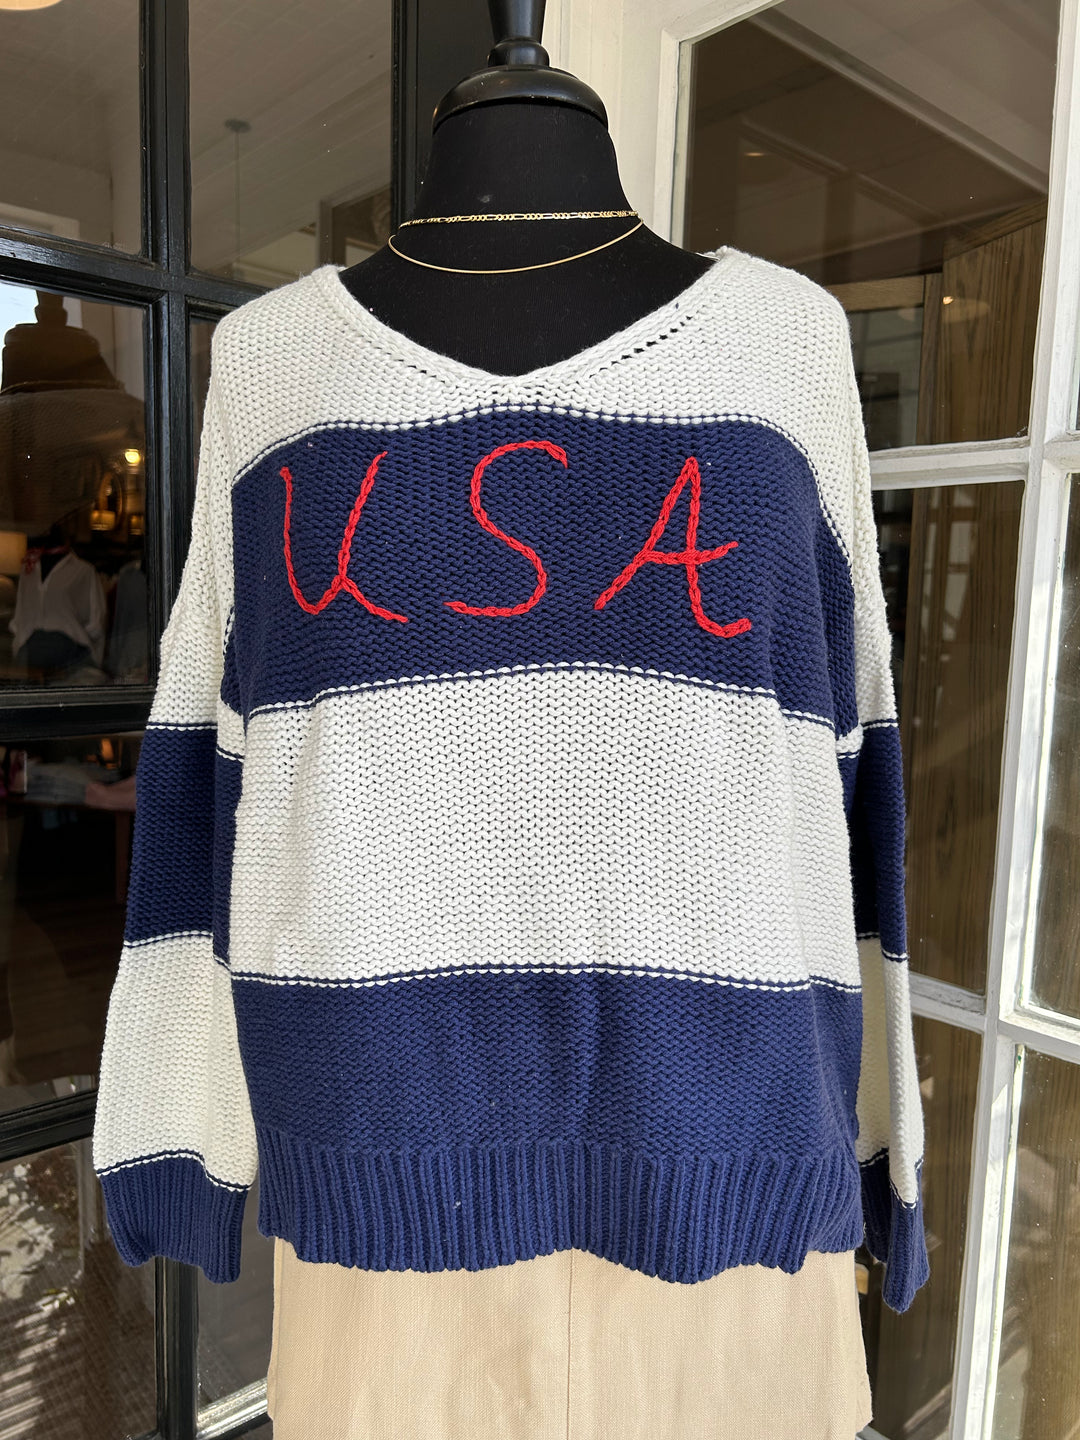 Stripe USA Sweater